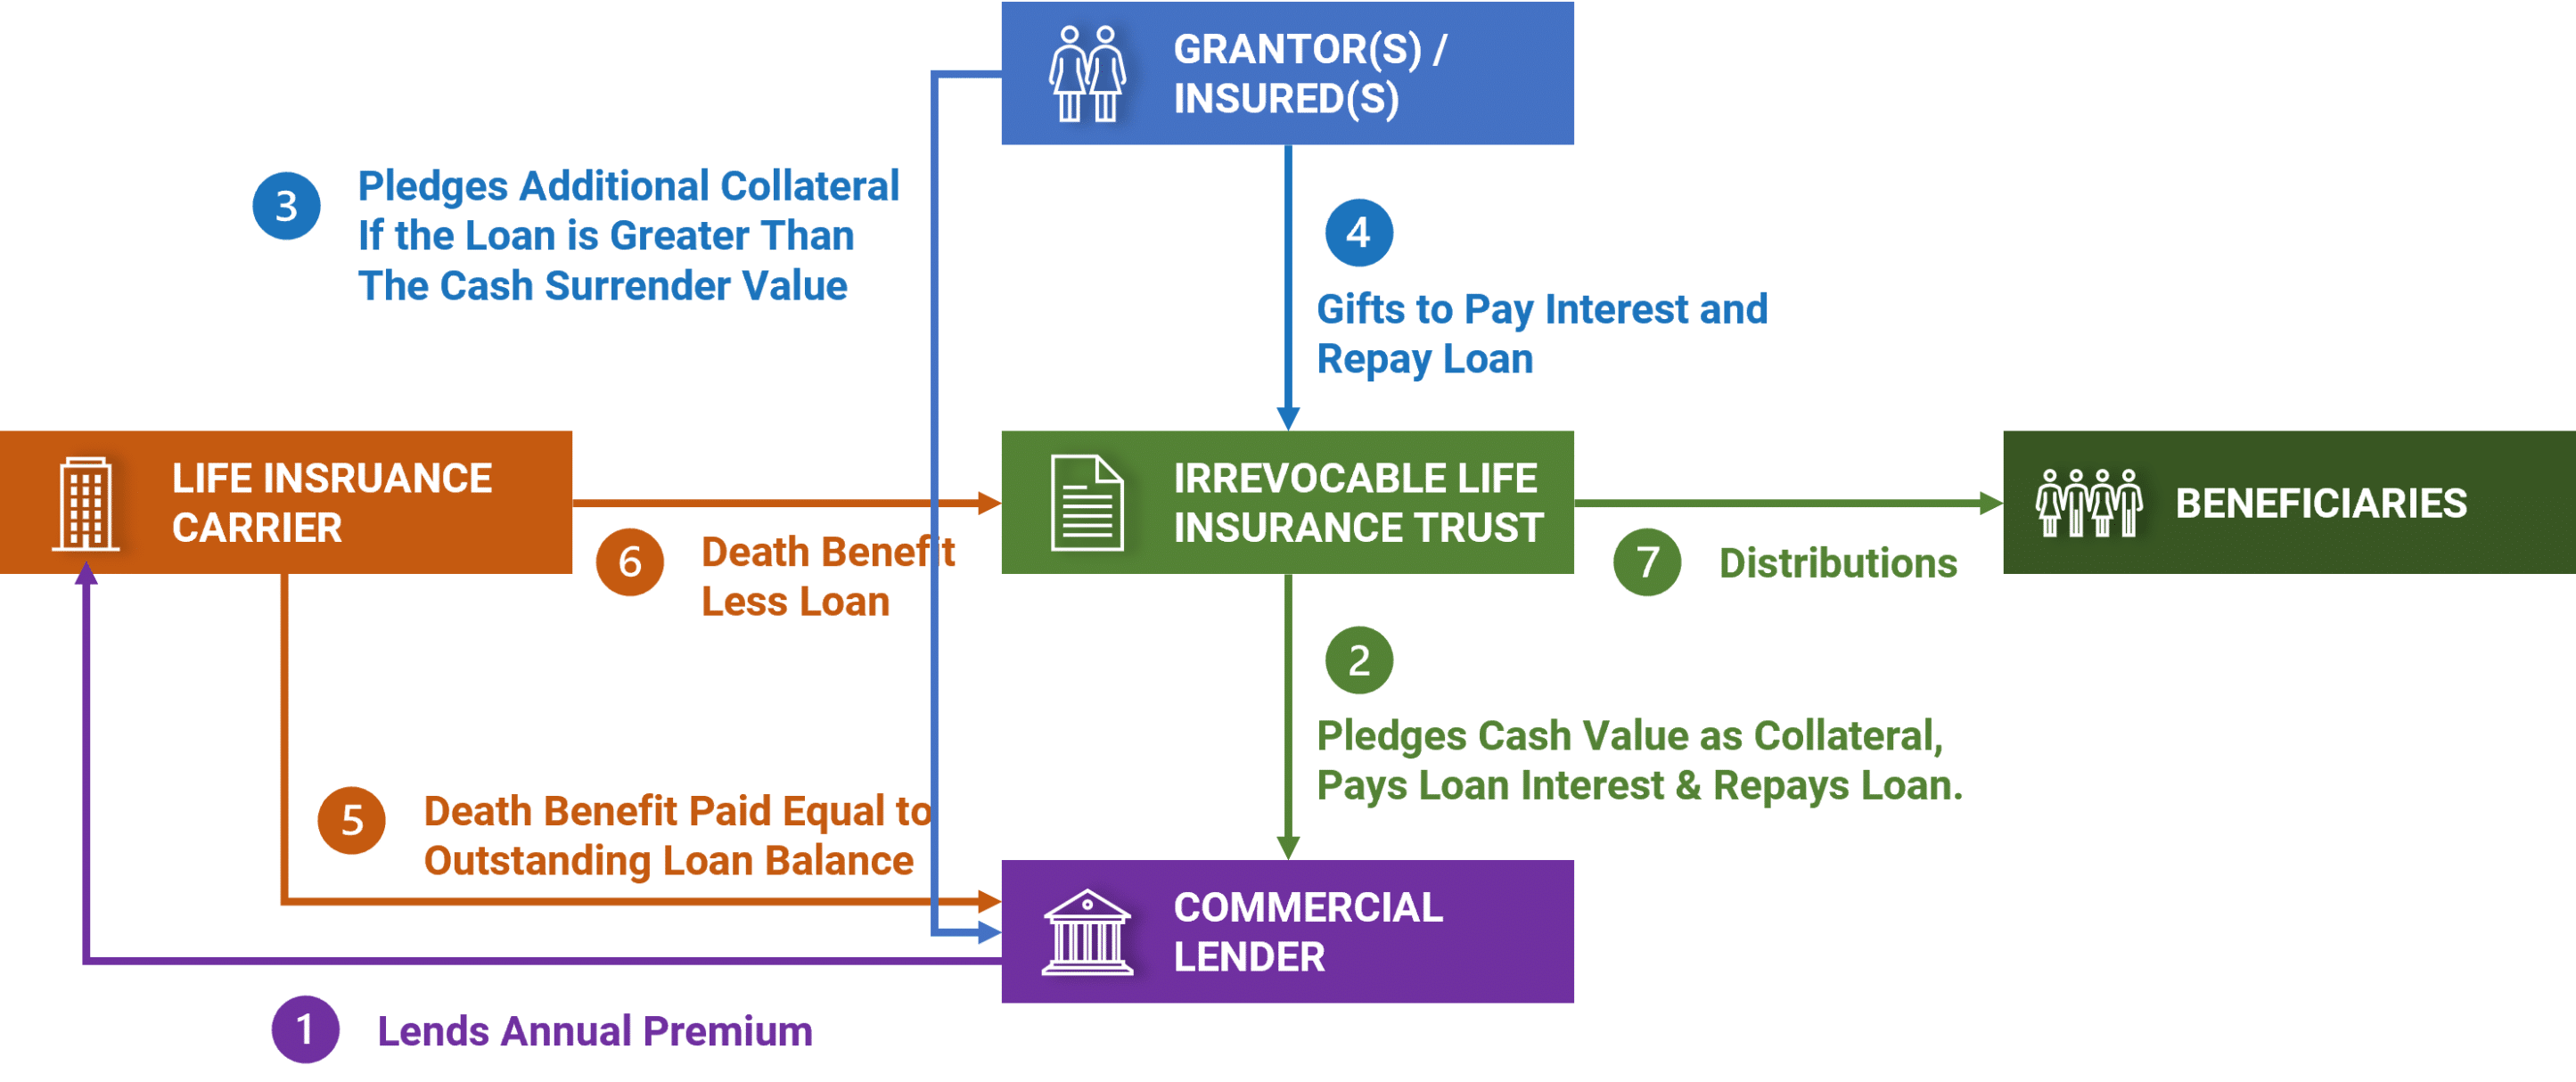 Premium Financing Life Insurance